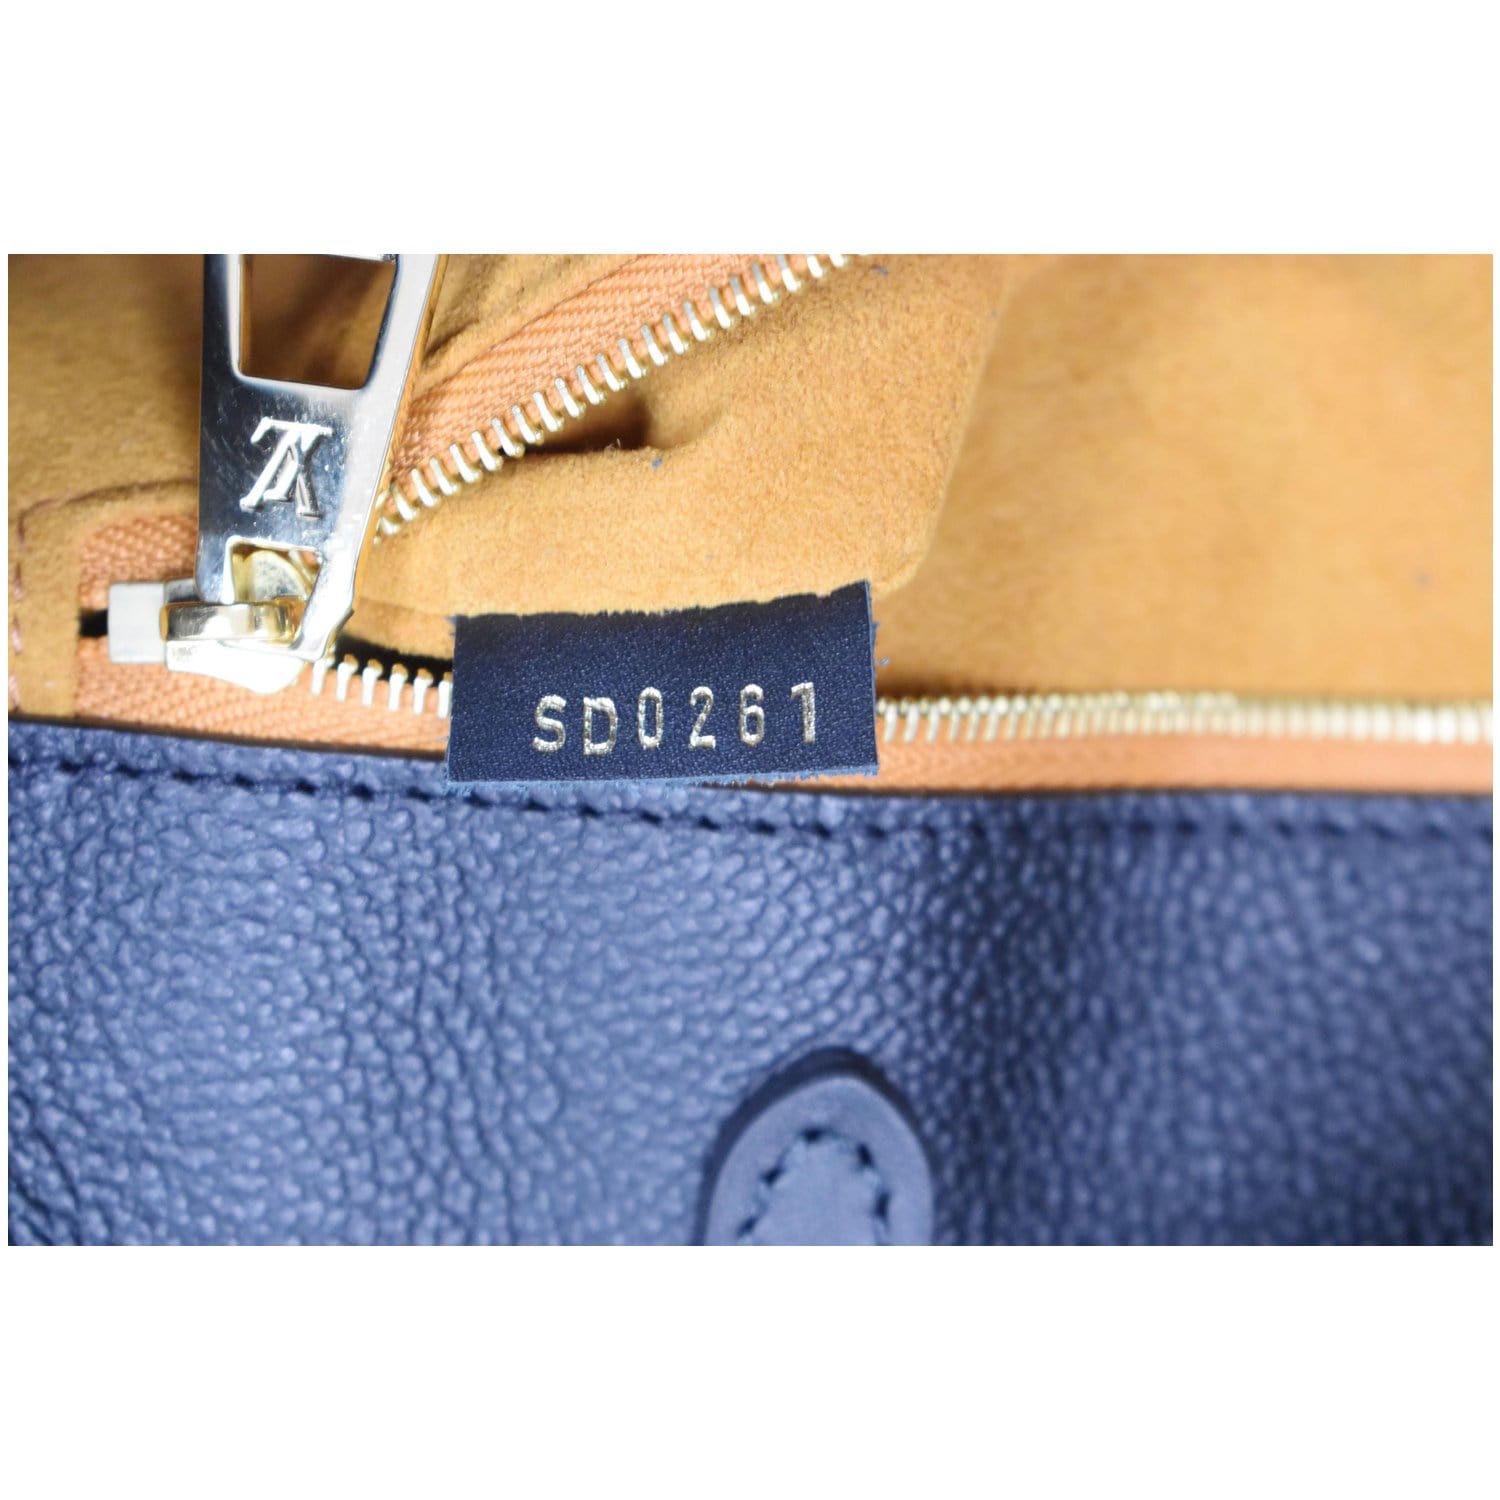 Louis Vuitton Onthego GM Monogram Empreinte Tote Bag